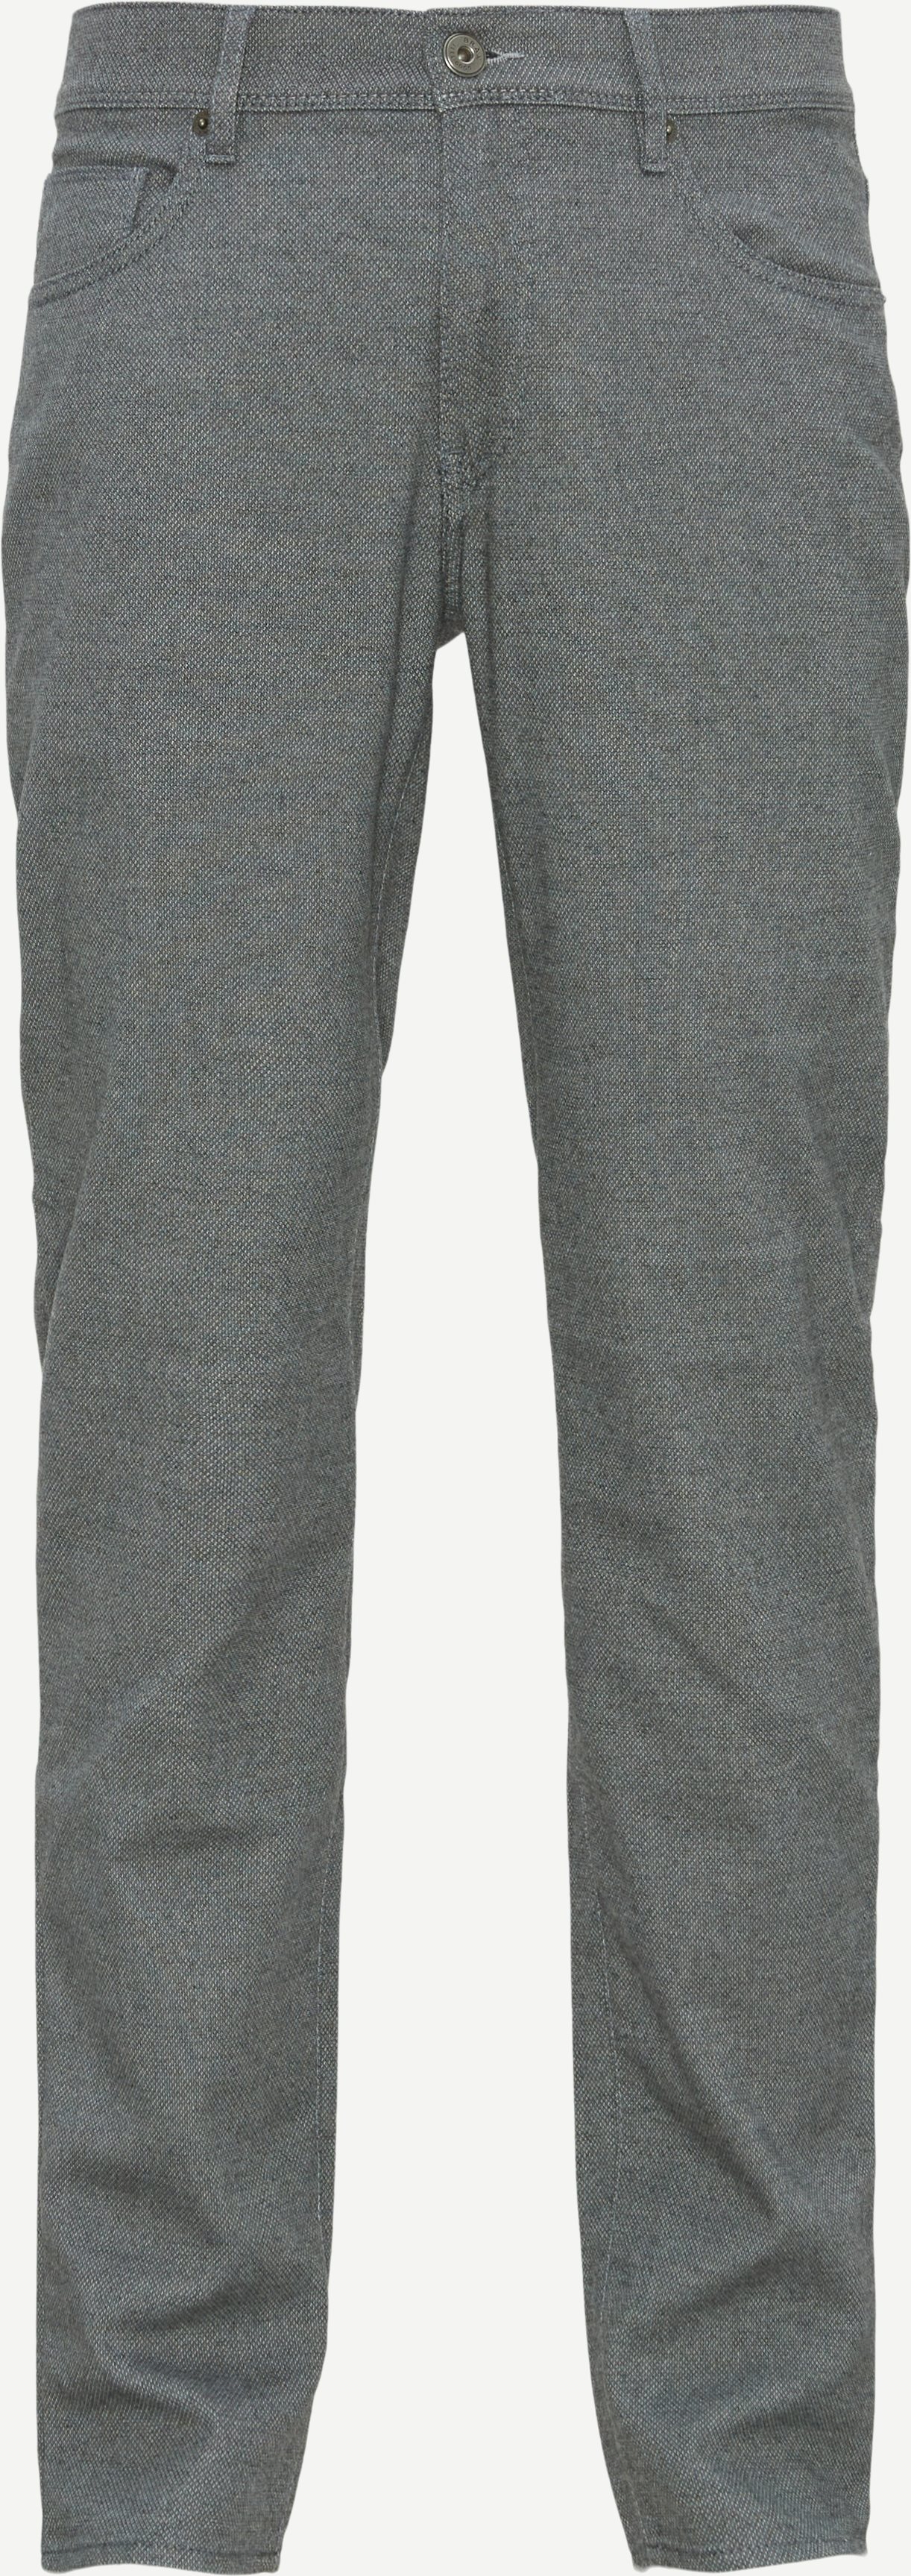 Brax Jeans 81-1727 CADIZ Grey